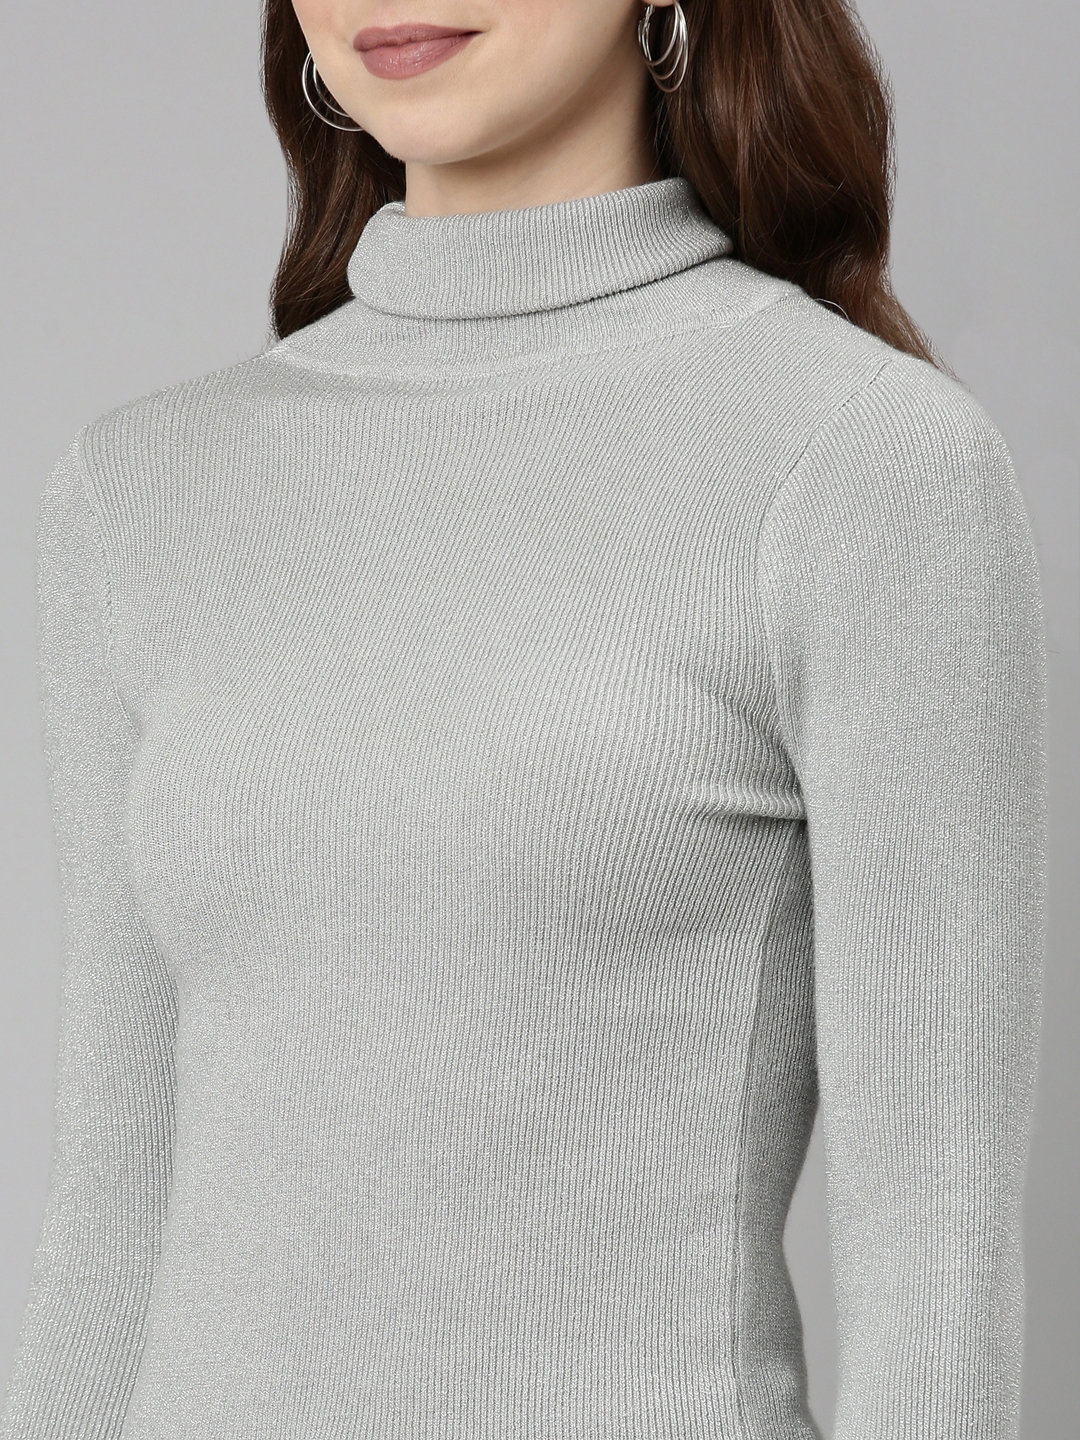 Showoff | SHOWOFF Women's High Neck Embellished Regular Sleeves Fitted Grey Top 7